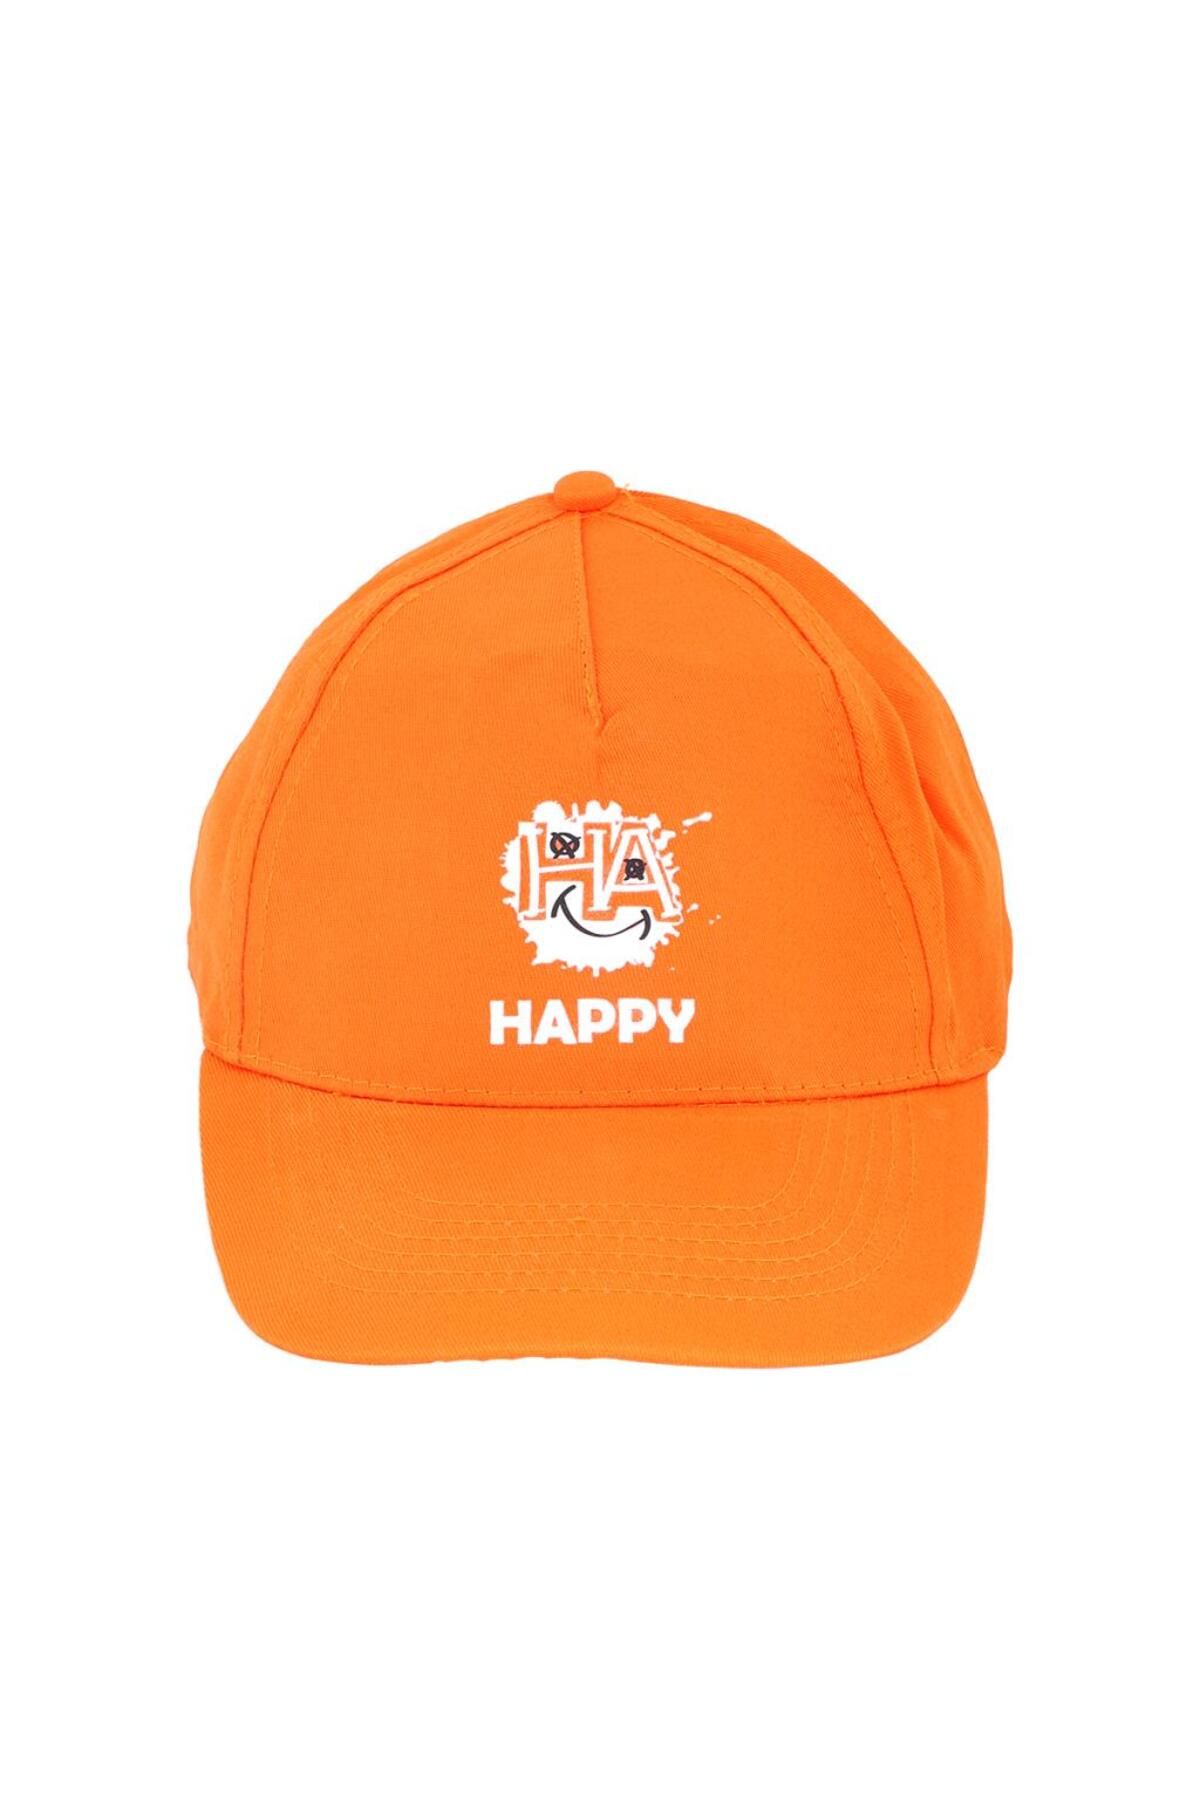 Biggdesign Moods Up Happy Turuncu Şapka